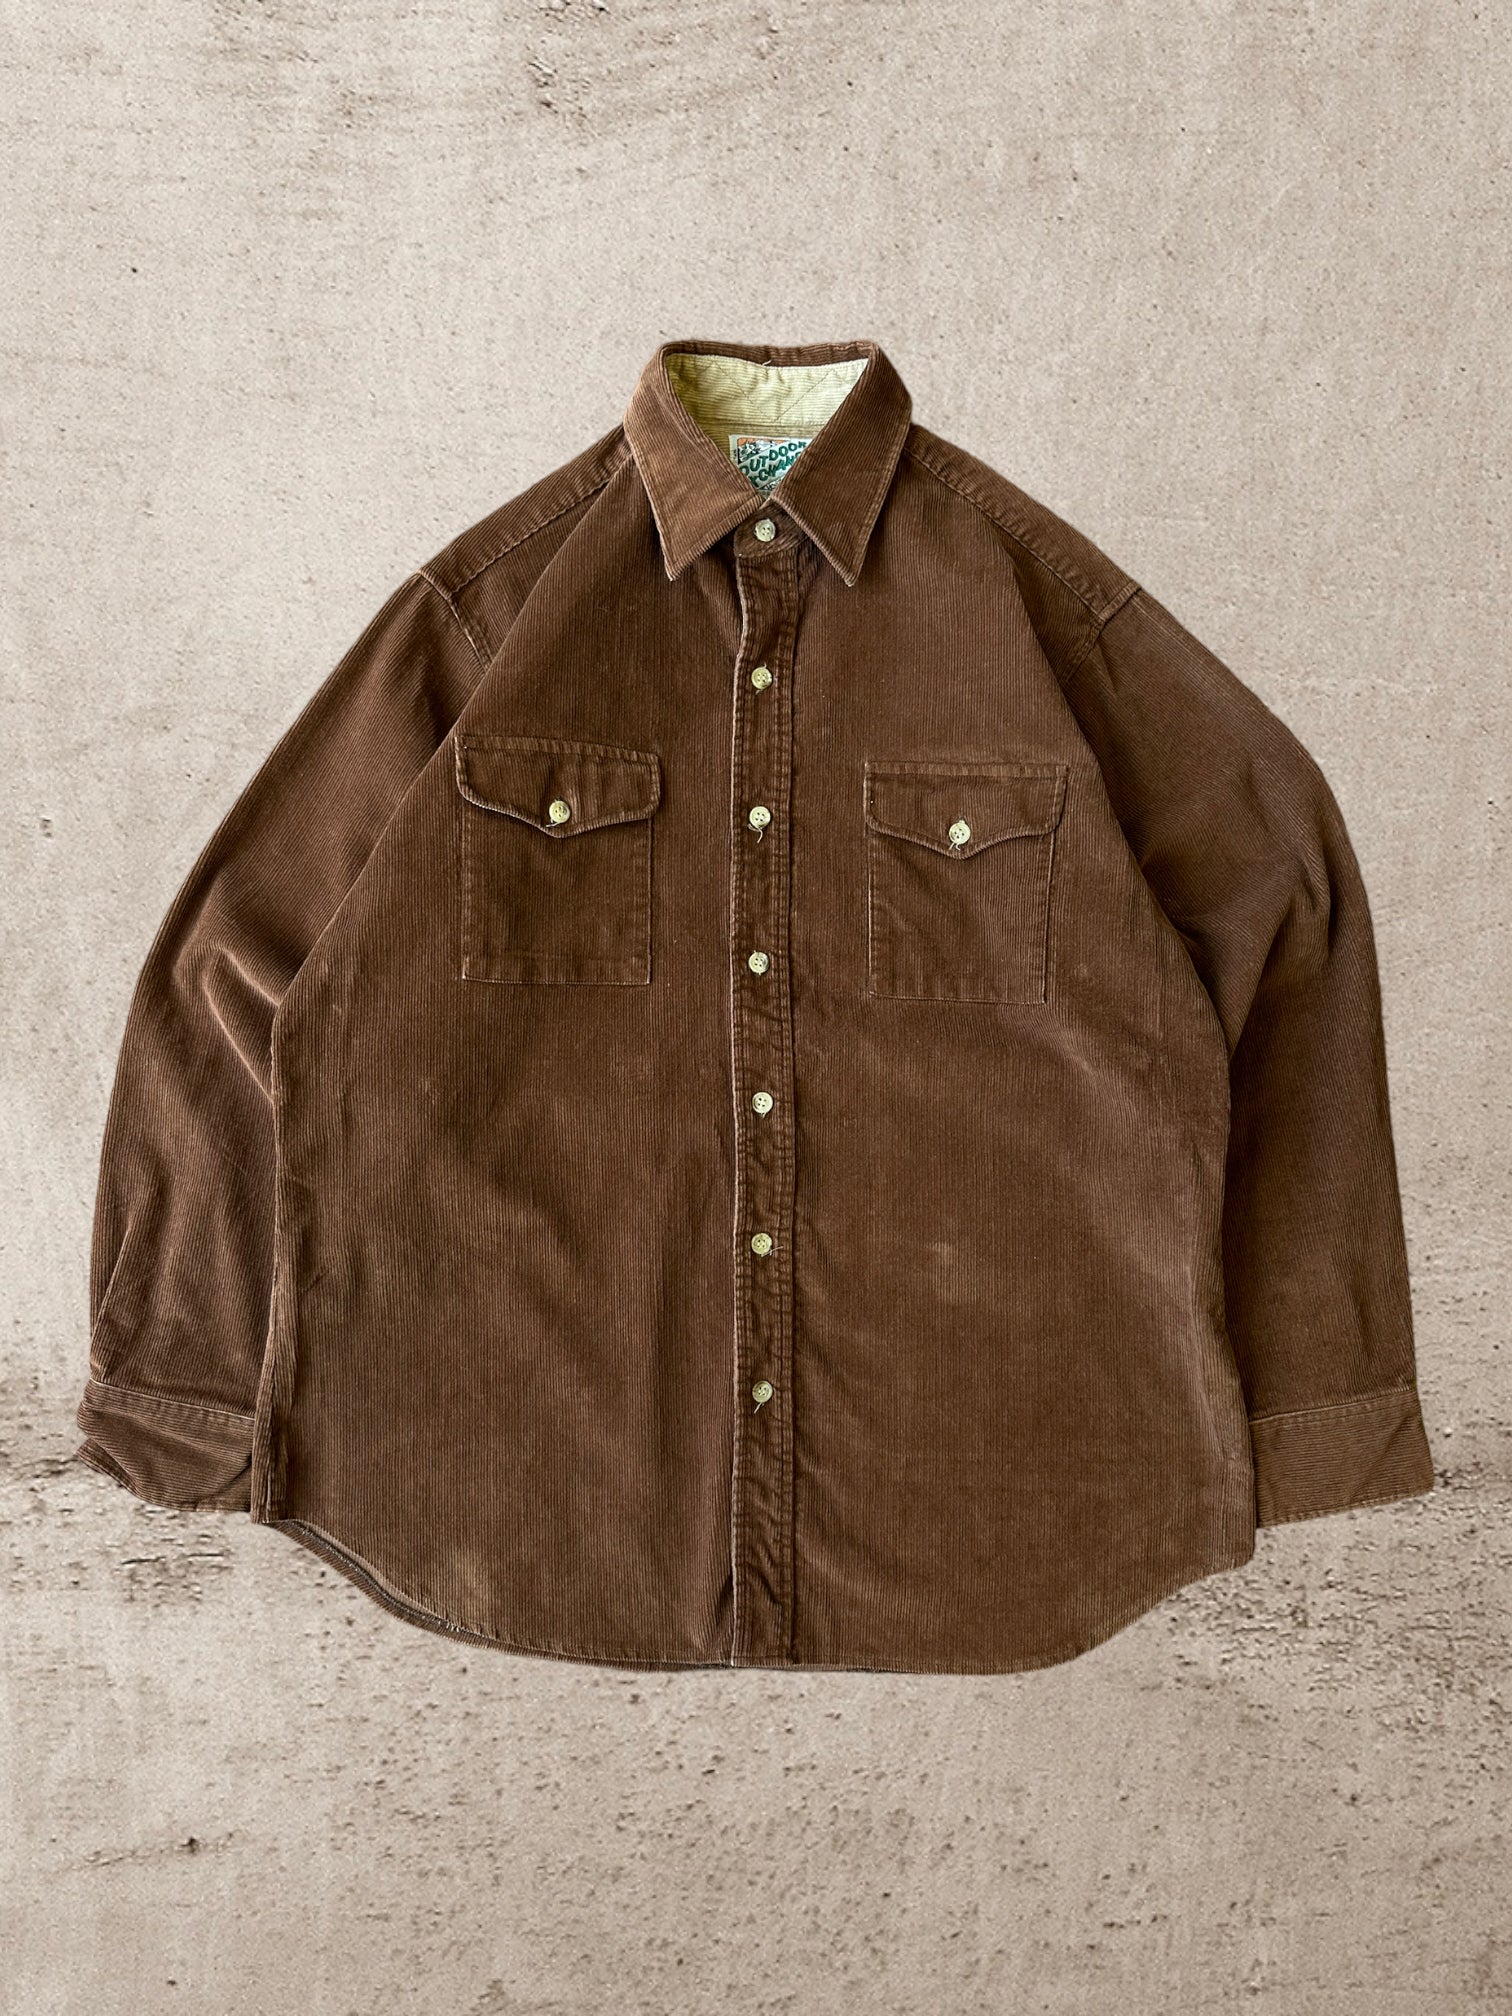 Vintage Brown Corduroy Button Up - Large